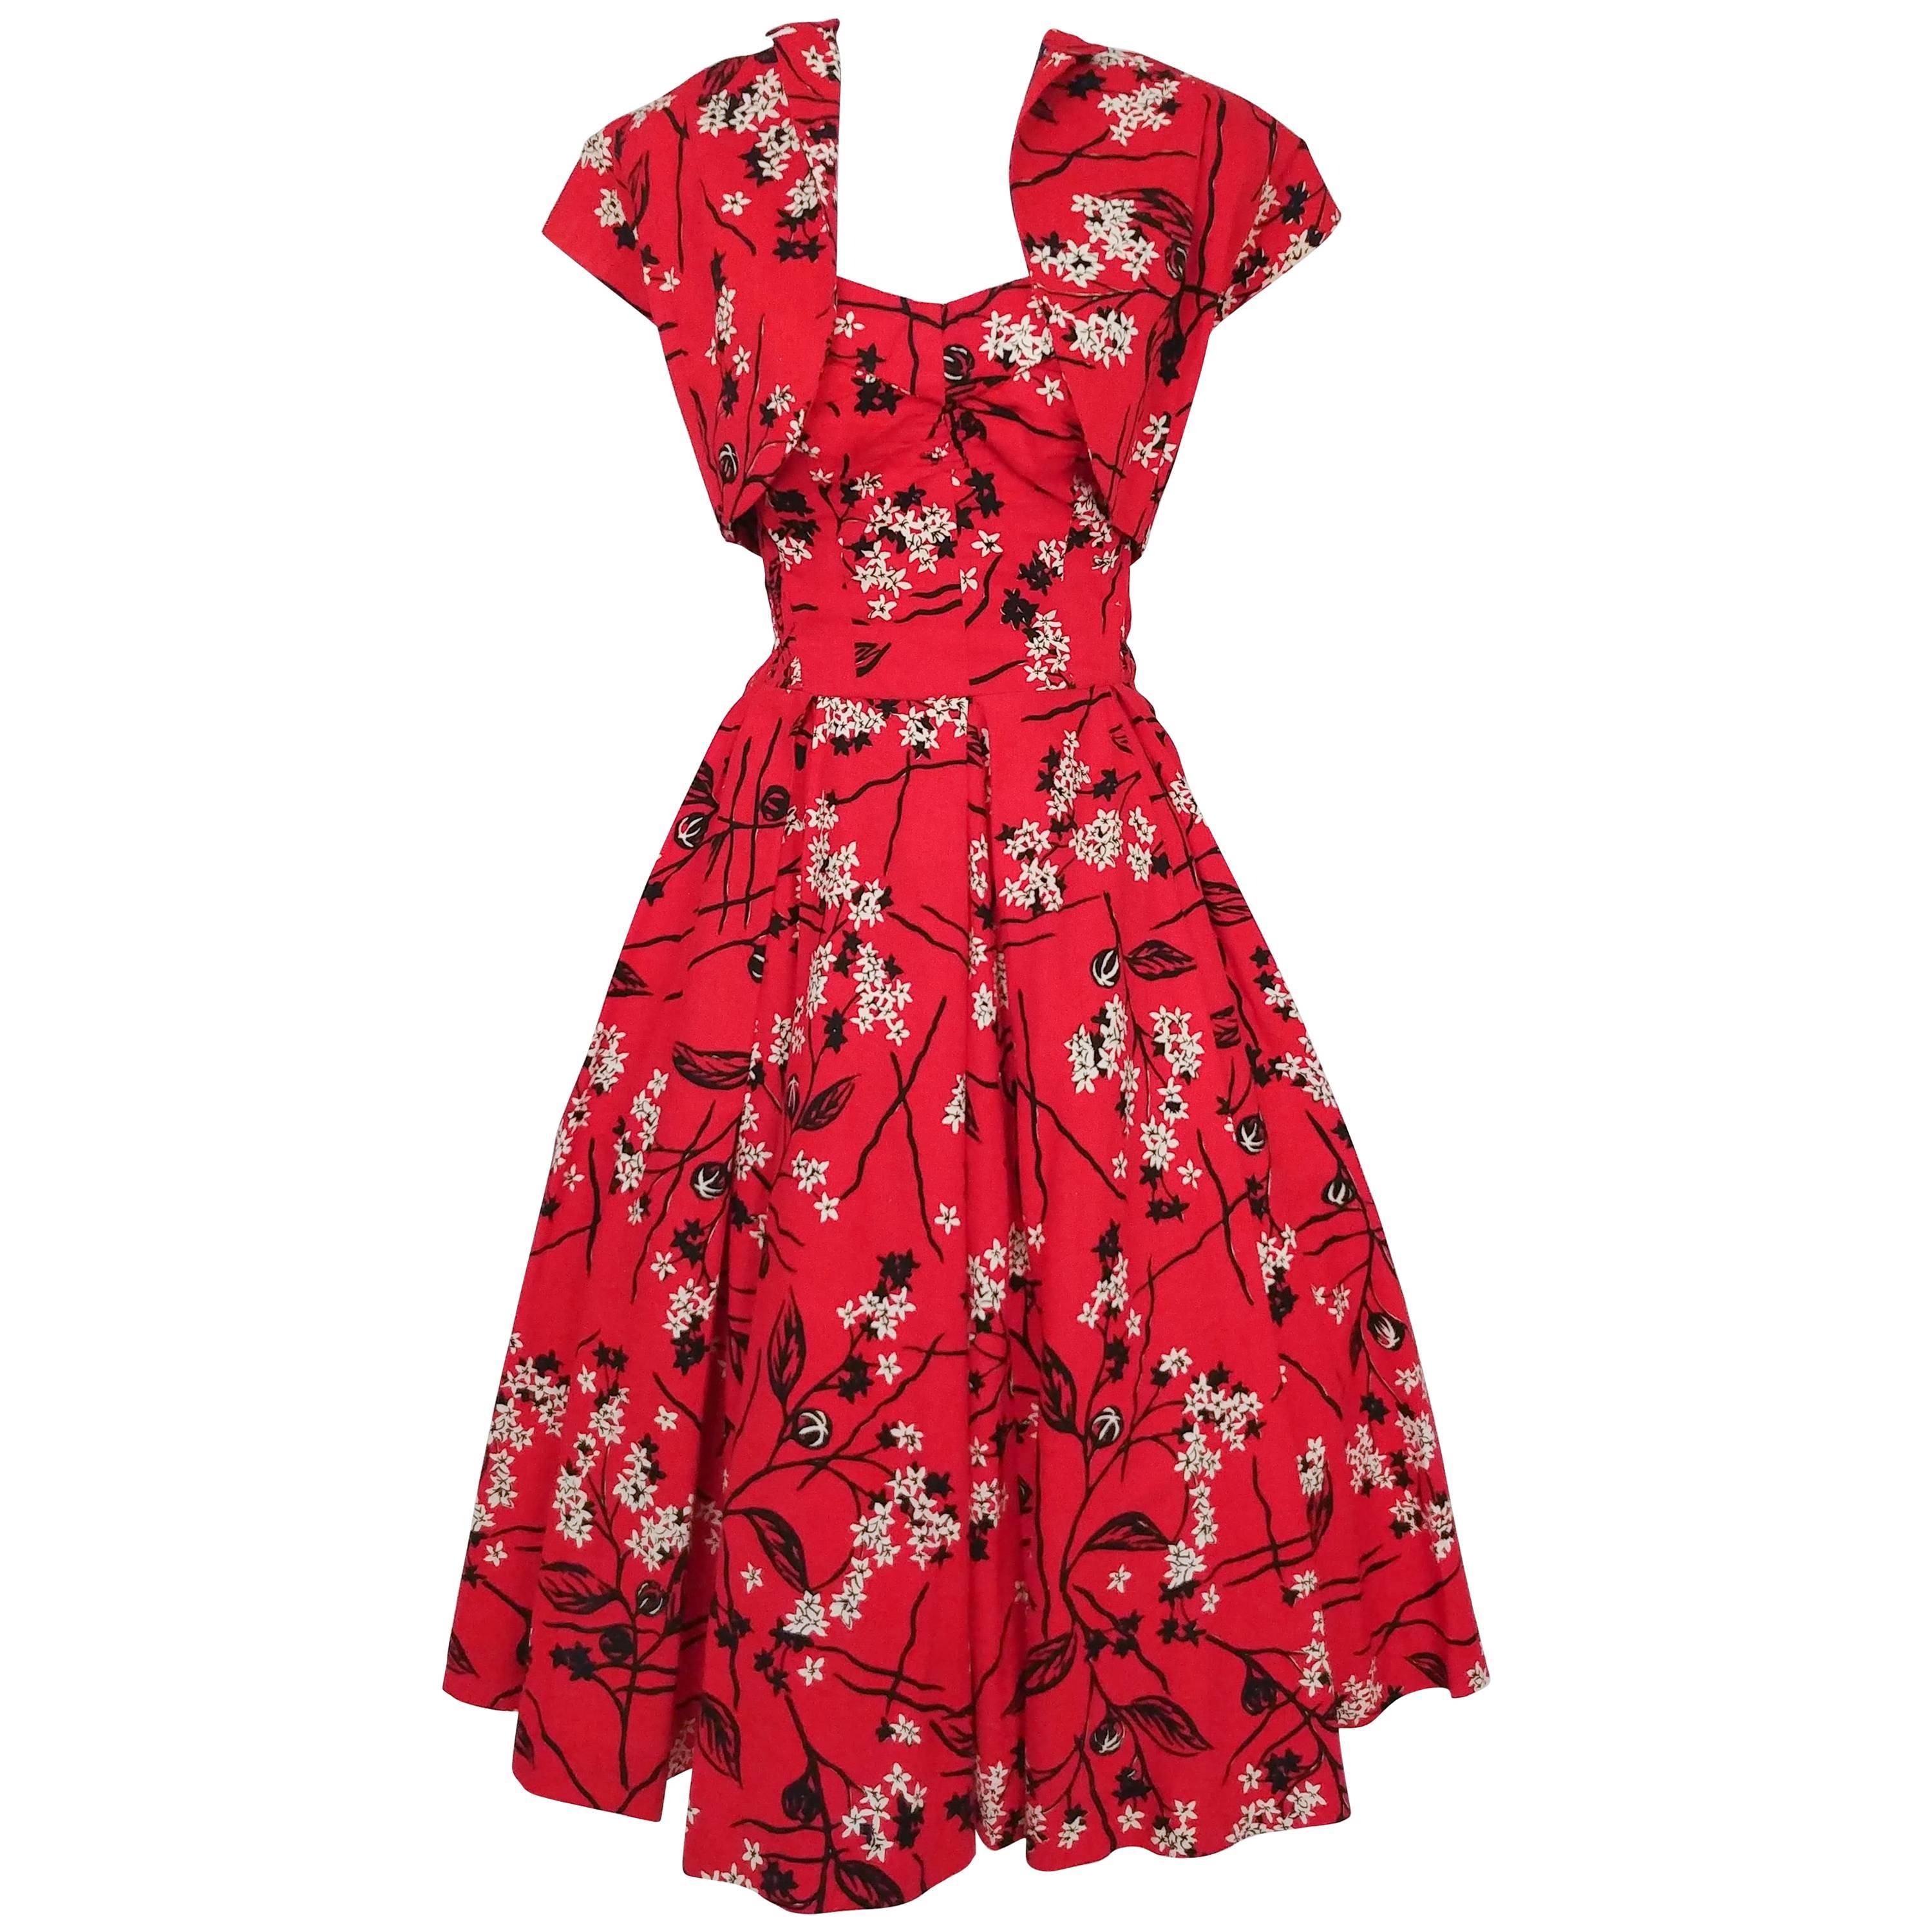 Shaheen Tiki Print Rotes Kleid und Bolero-Set, 1950er Jahre